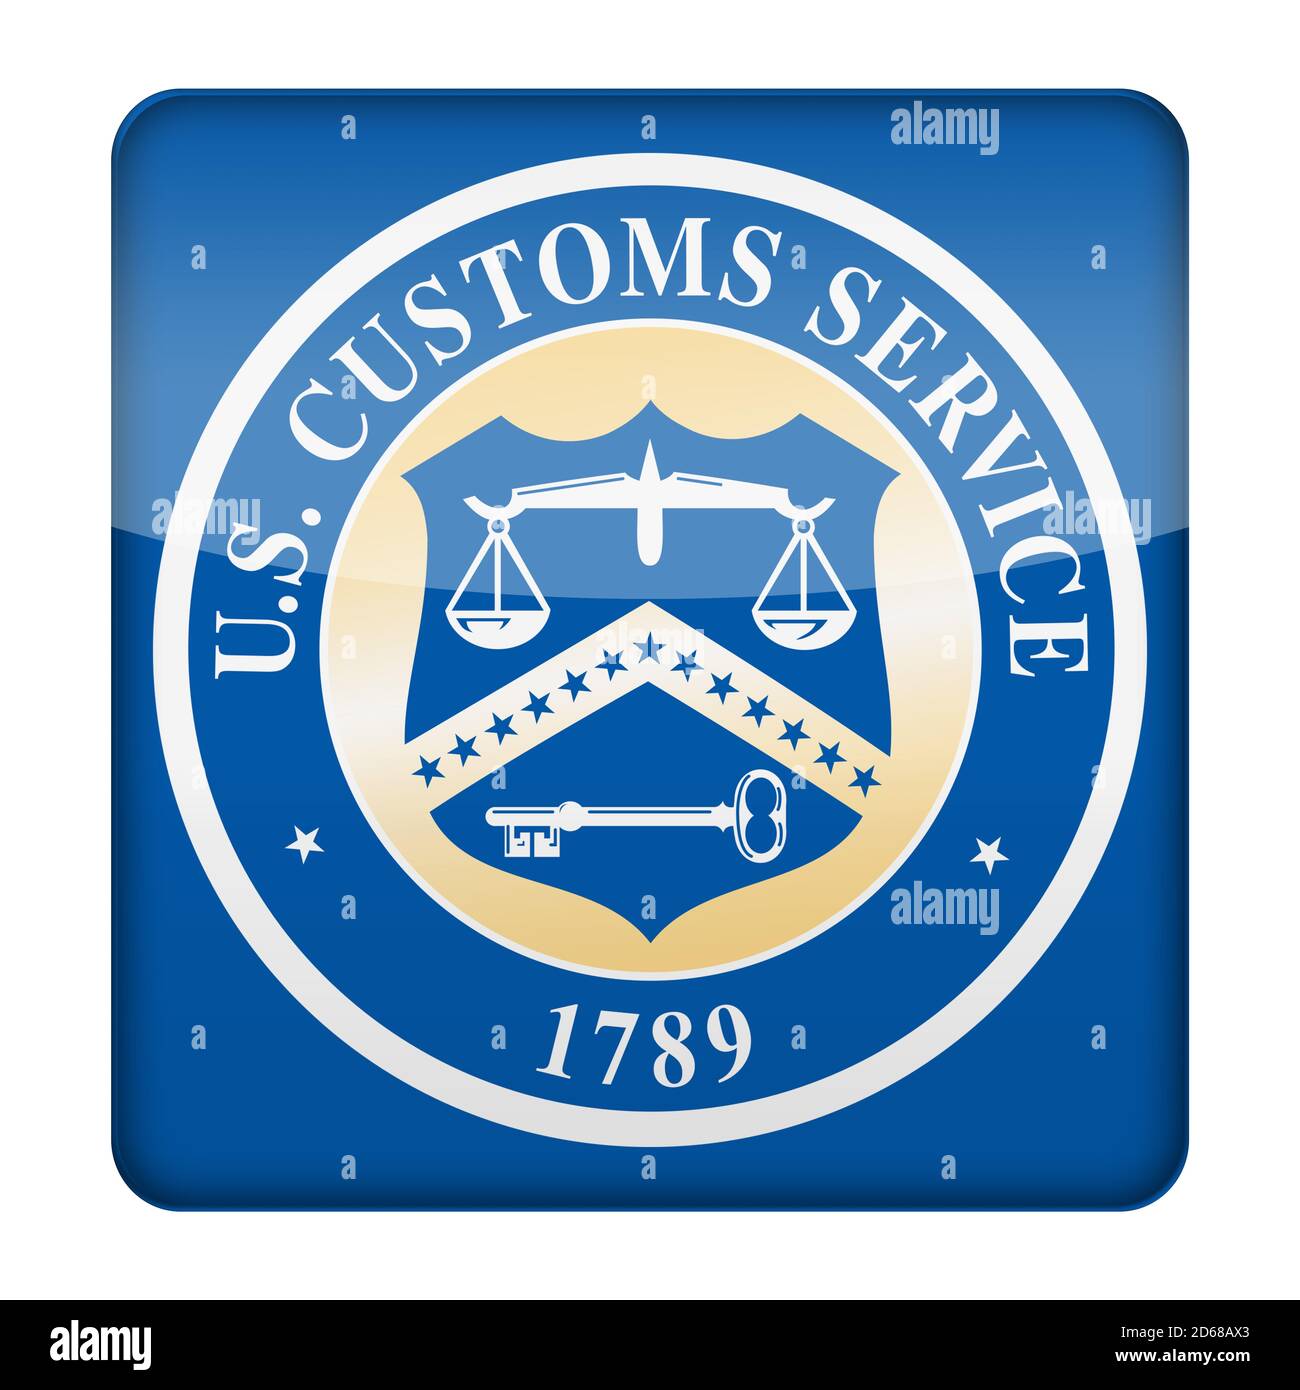 United States Customs Service logo Stock Photo